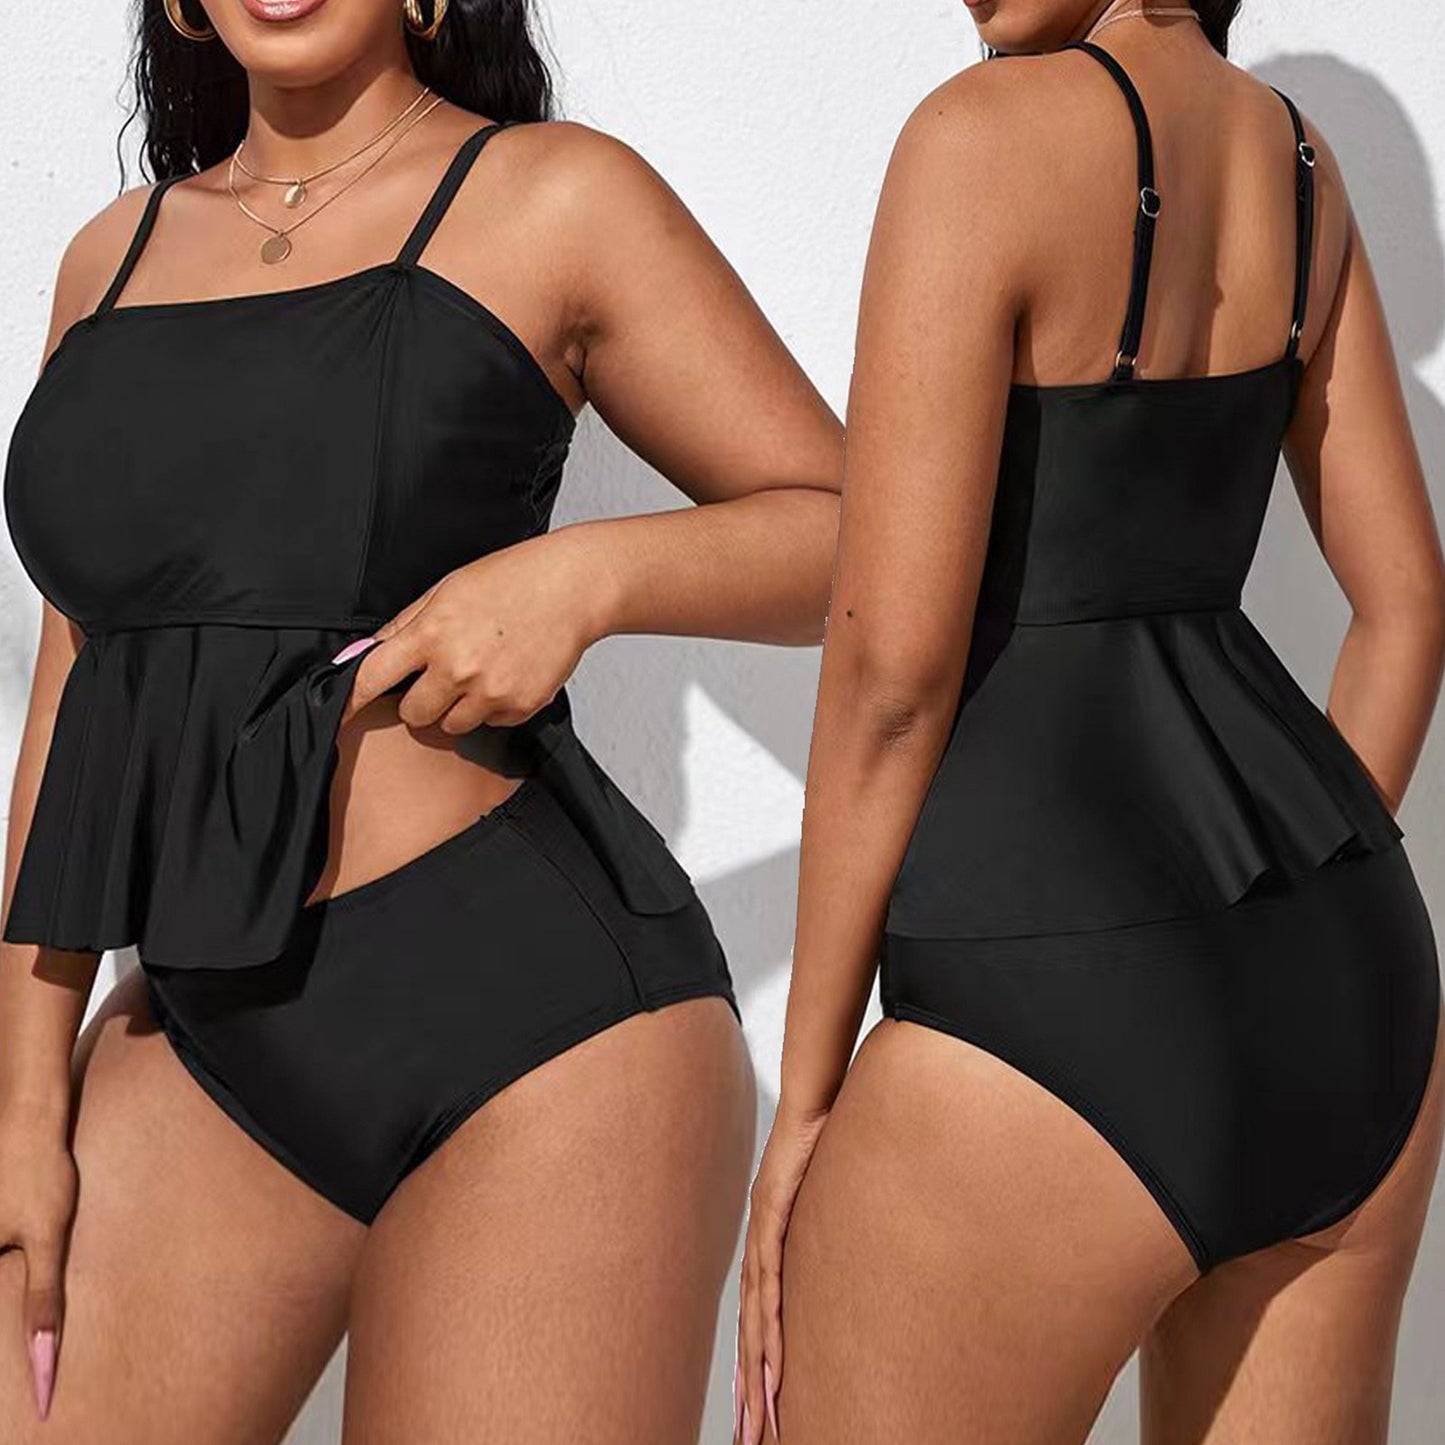 Ráela - Classic Plus Size Split Black Ruffle Tankini Swimsuit